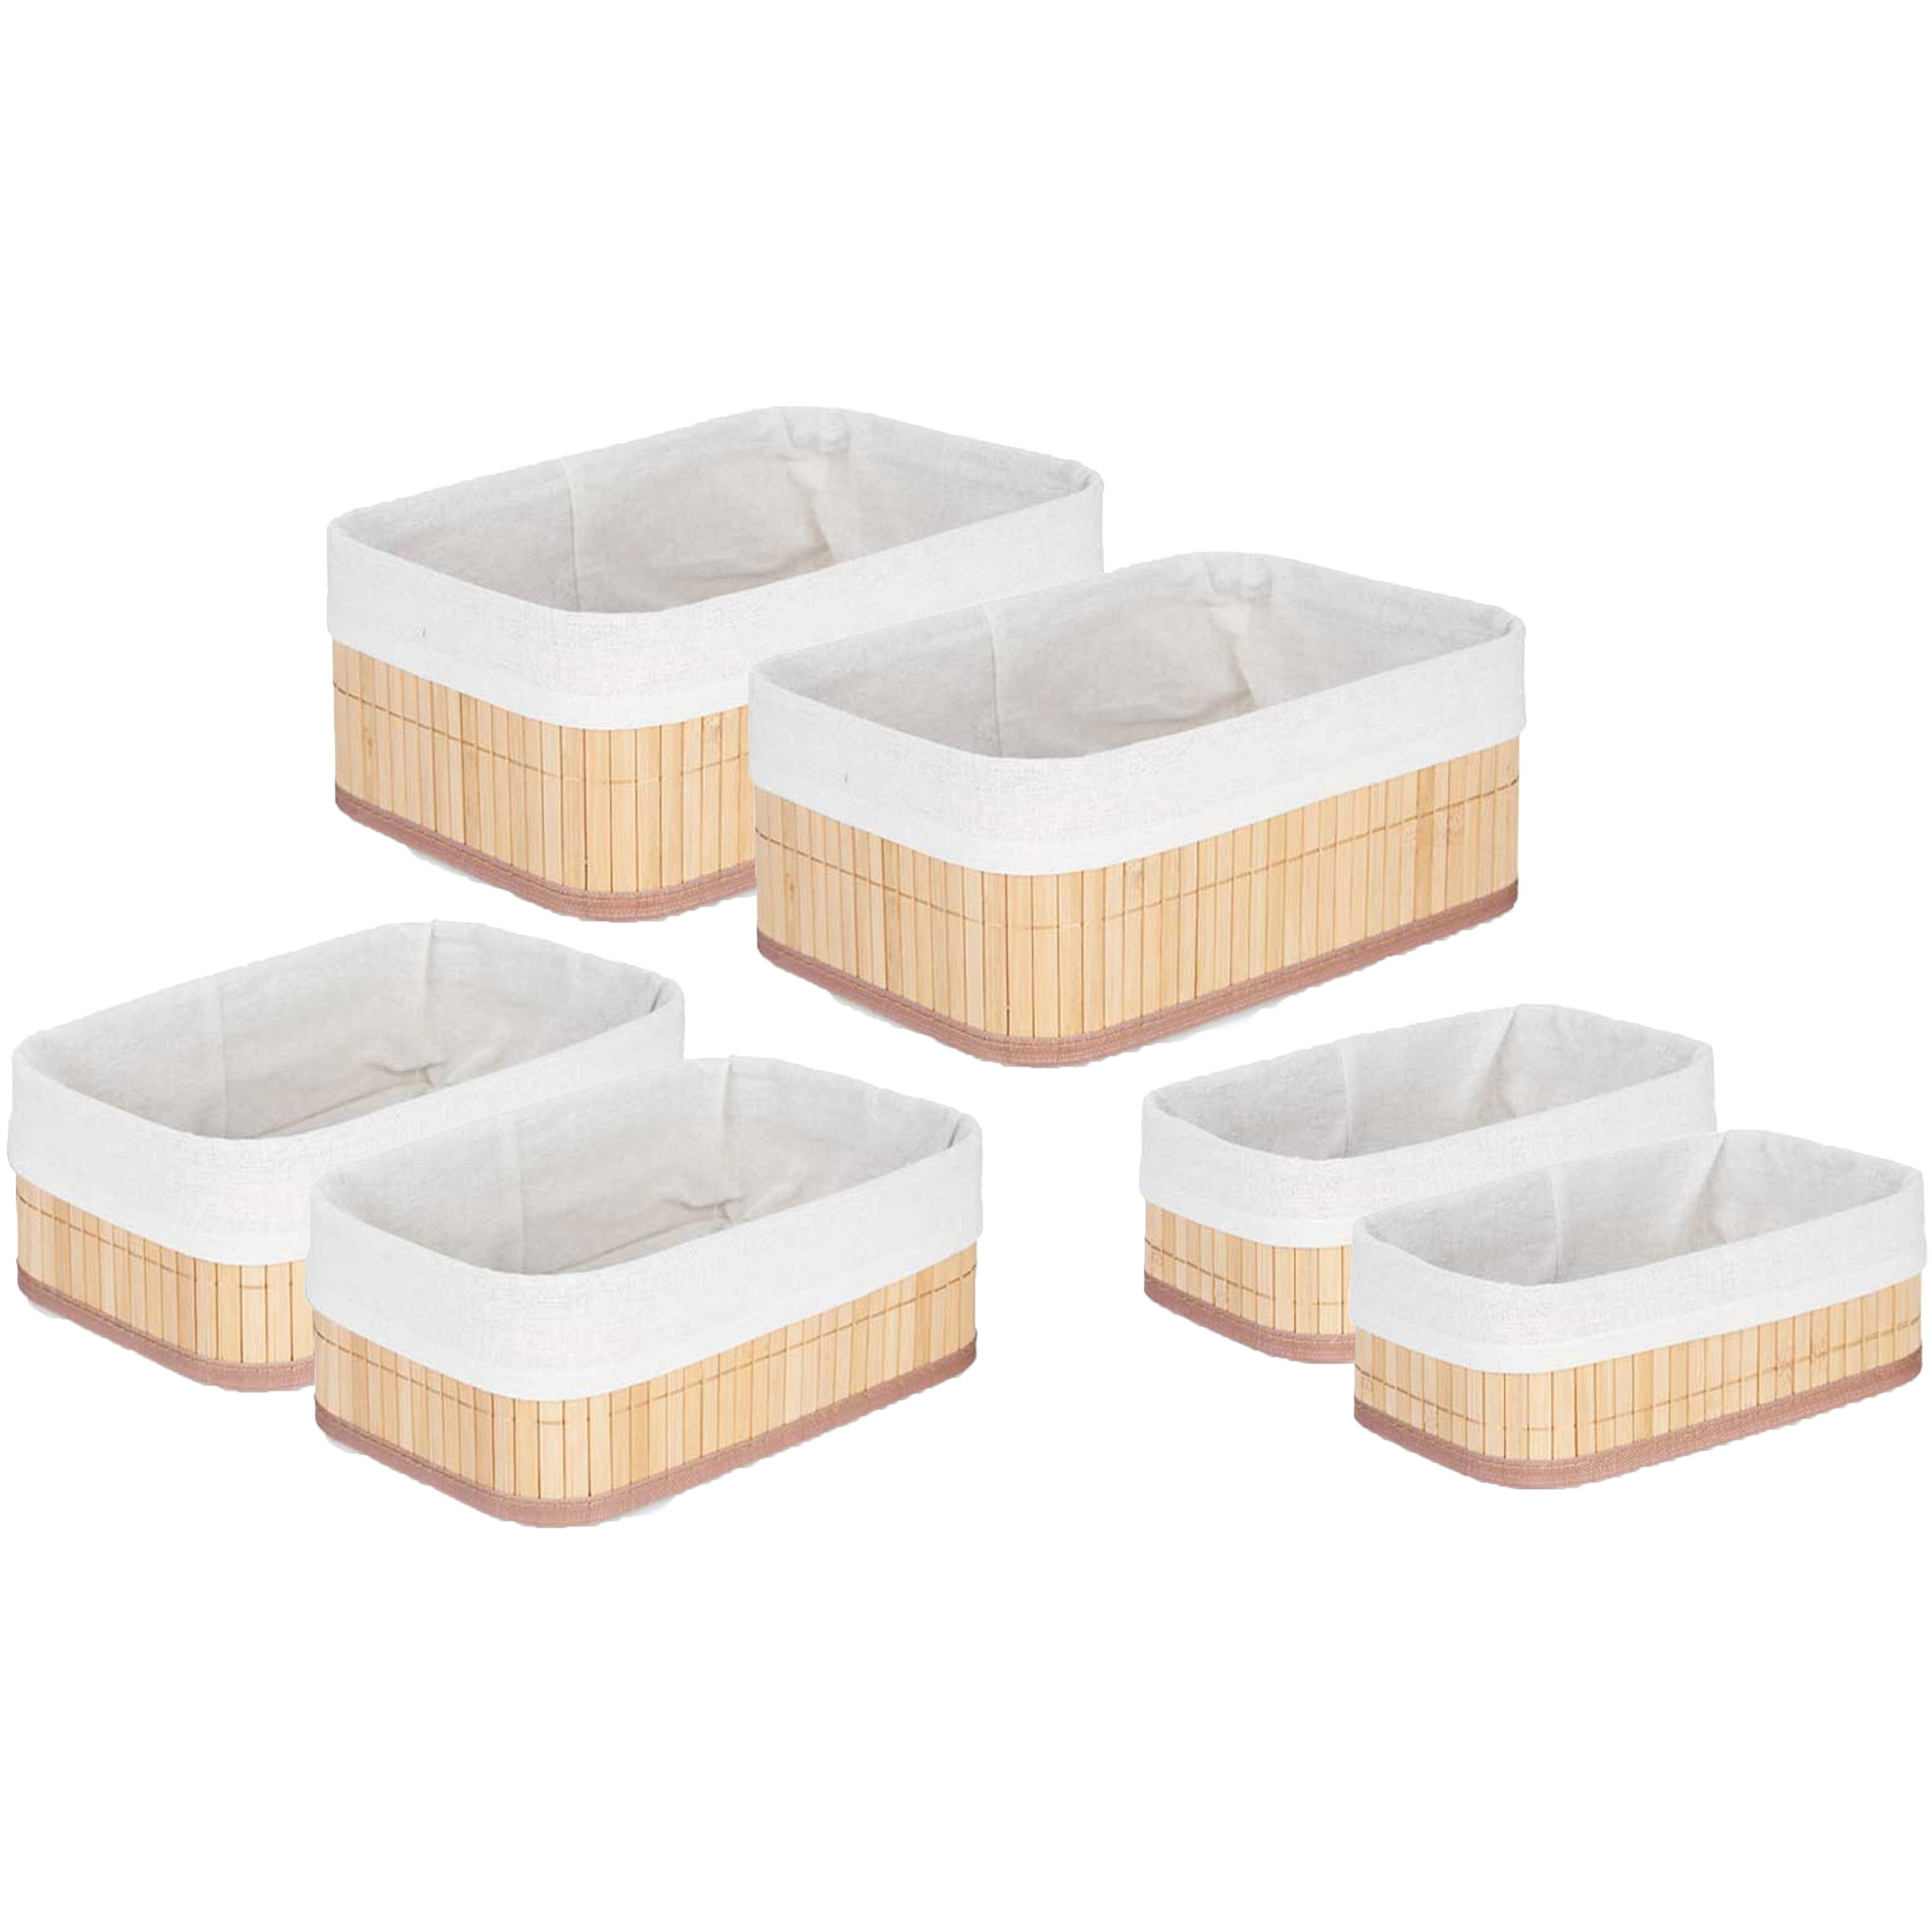 Kipit Badkamer-Toilet ruimte opbergmandjes bamboe-stof wit set 6x stuks